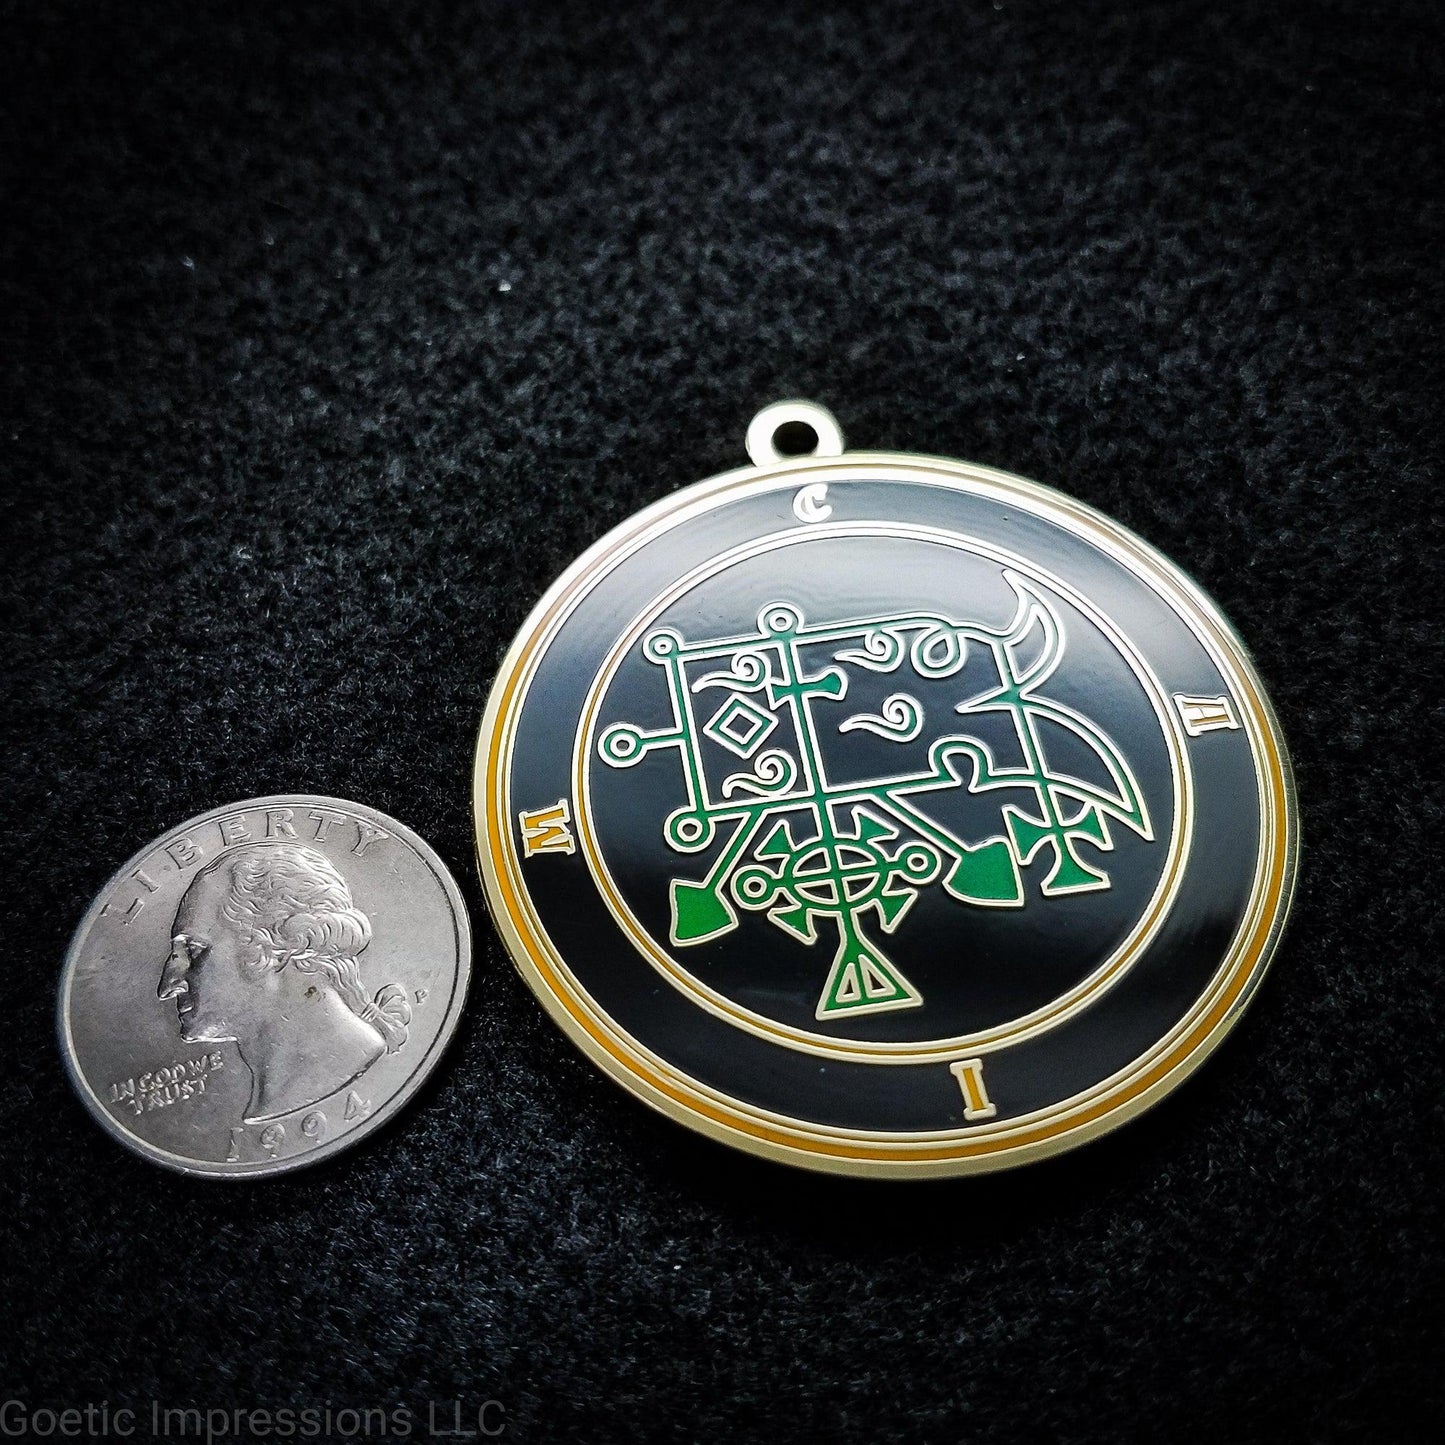 Ars goetia Caim seal medallion